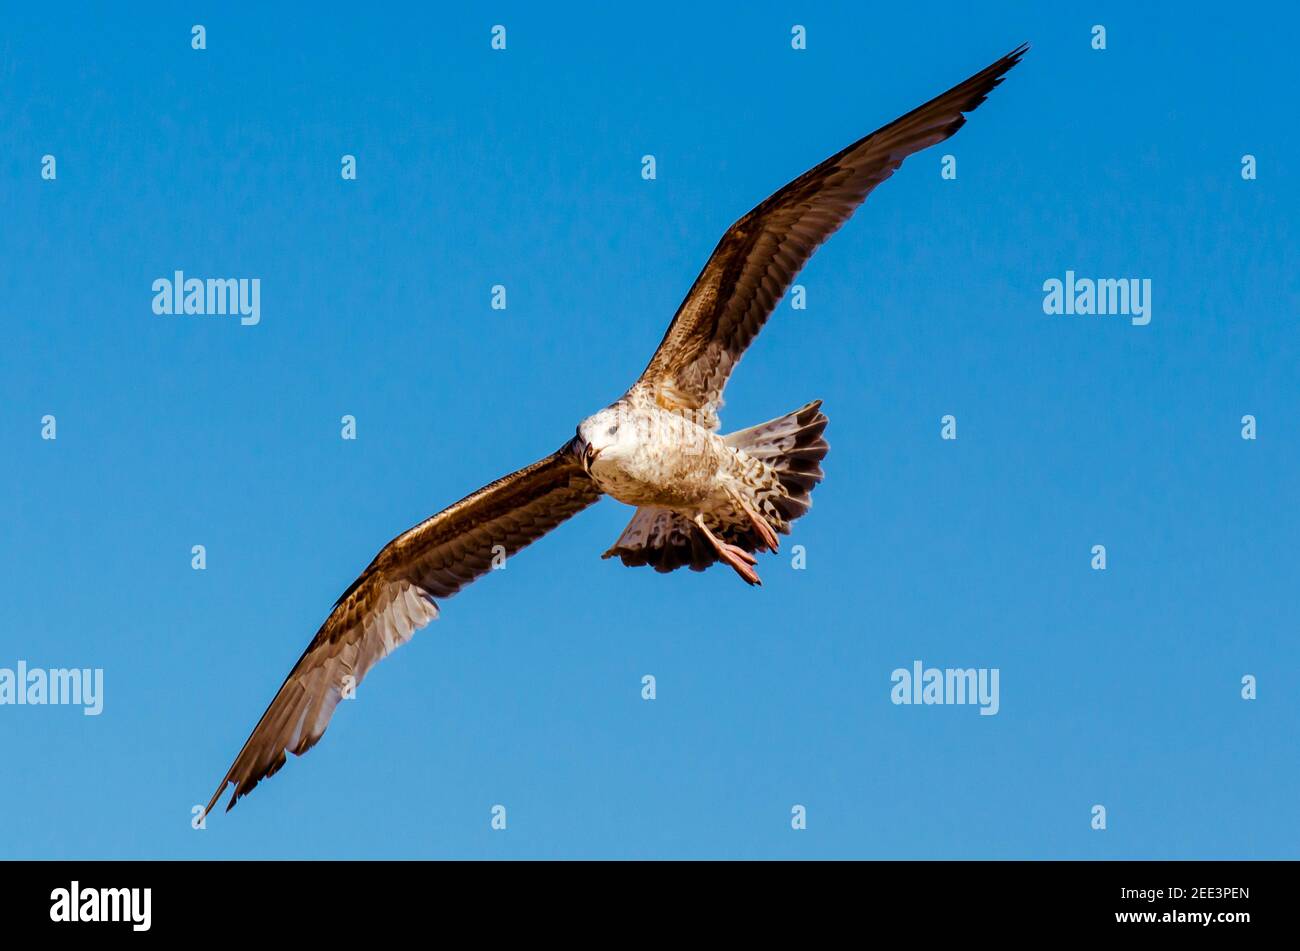 Grand aigle volant contre le ciel bleu clair Banque D'Images